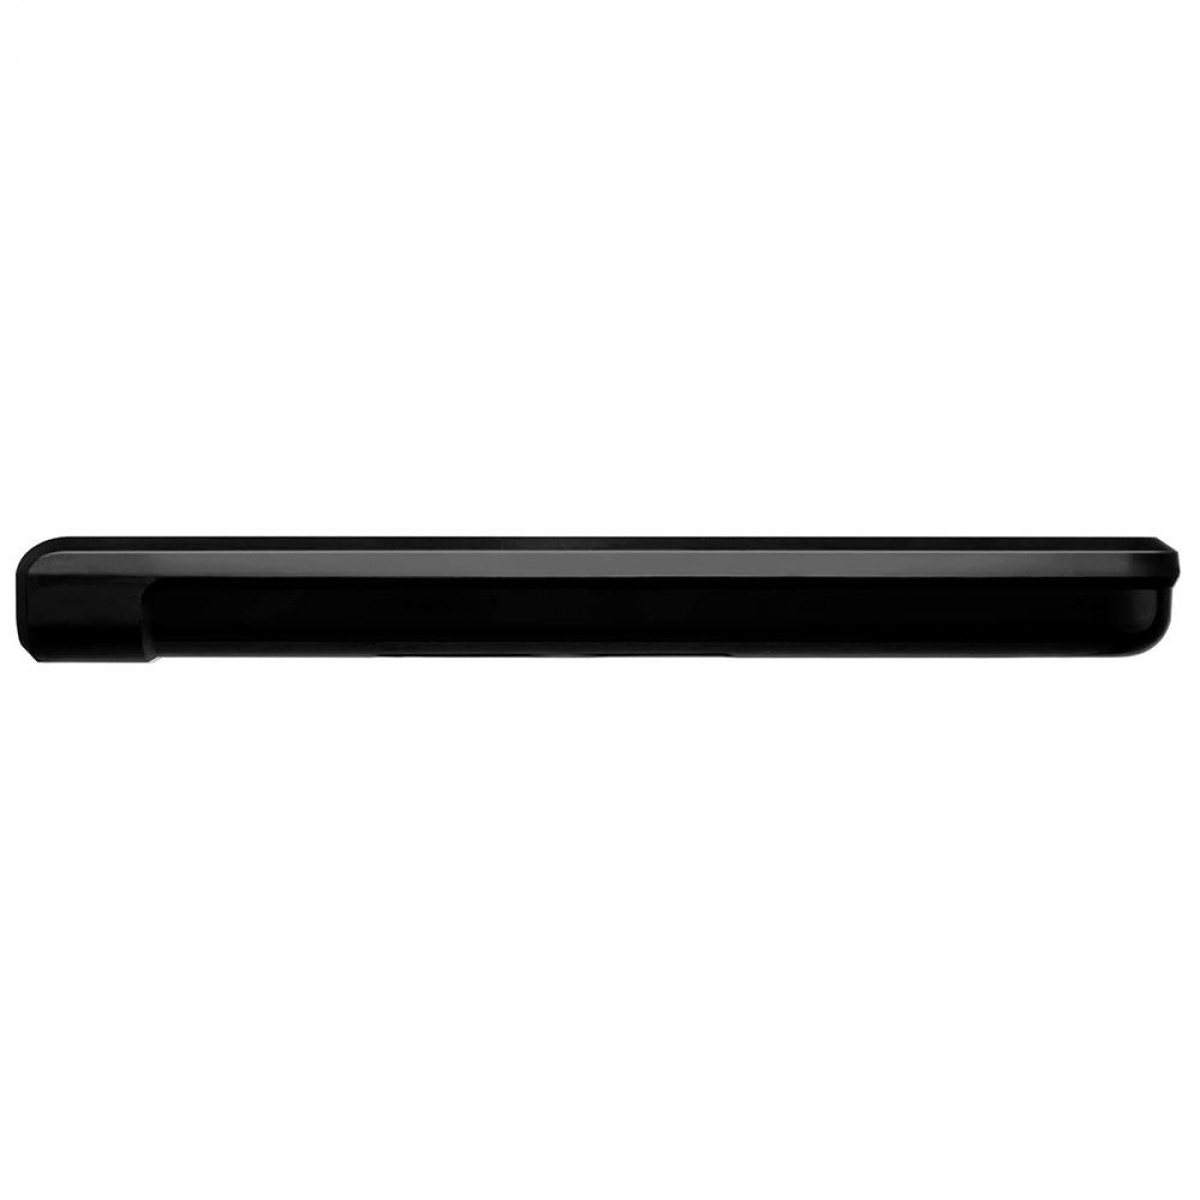 HD Externo Portátil Adata 1TB, 2.5 USB 3.0, Preto